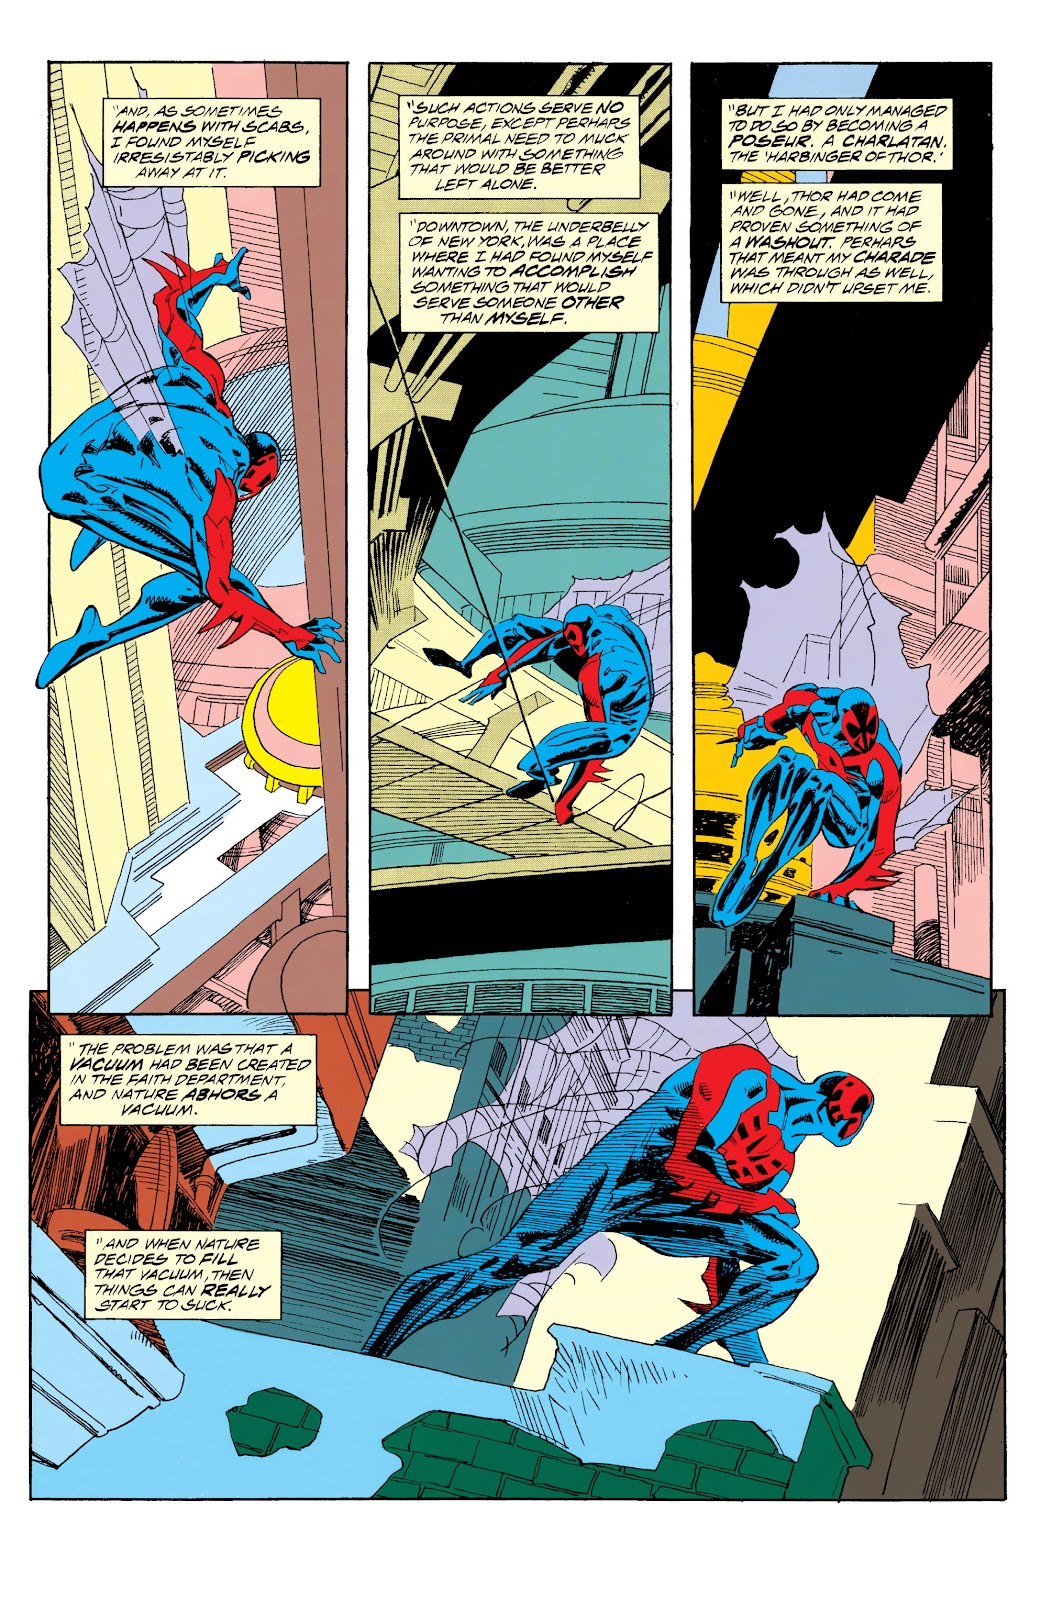 Spider-Man 2099 (1992) issue 17 - Page 8